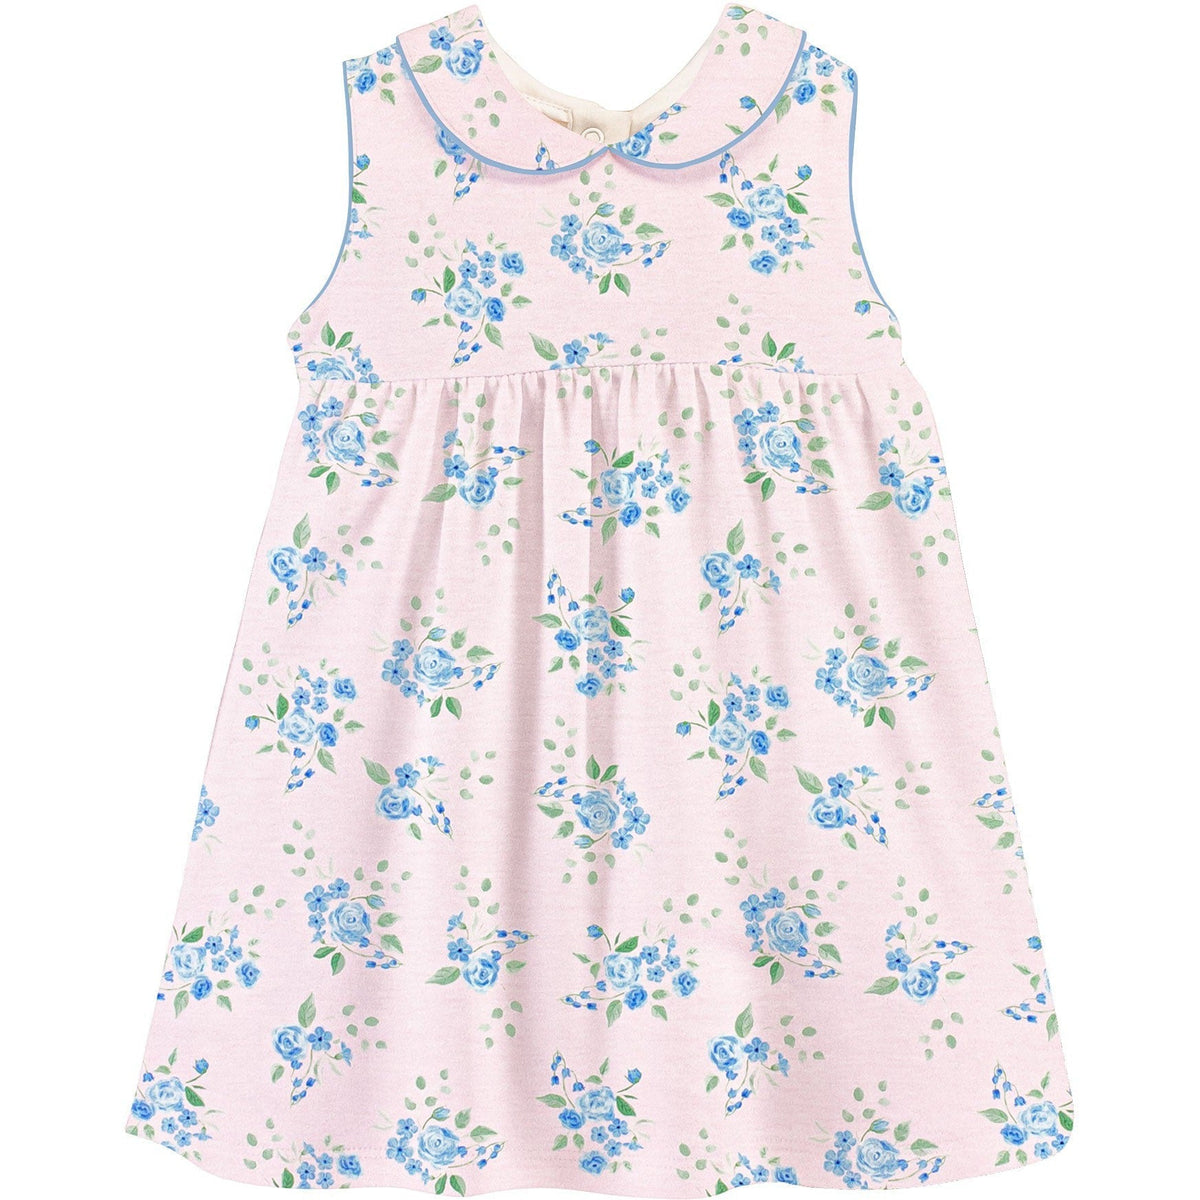 Baby Club Chic English Garden Blue Dress With Round Collar